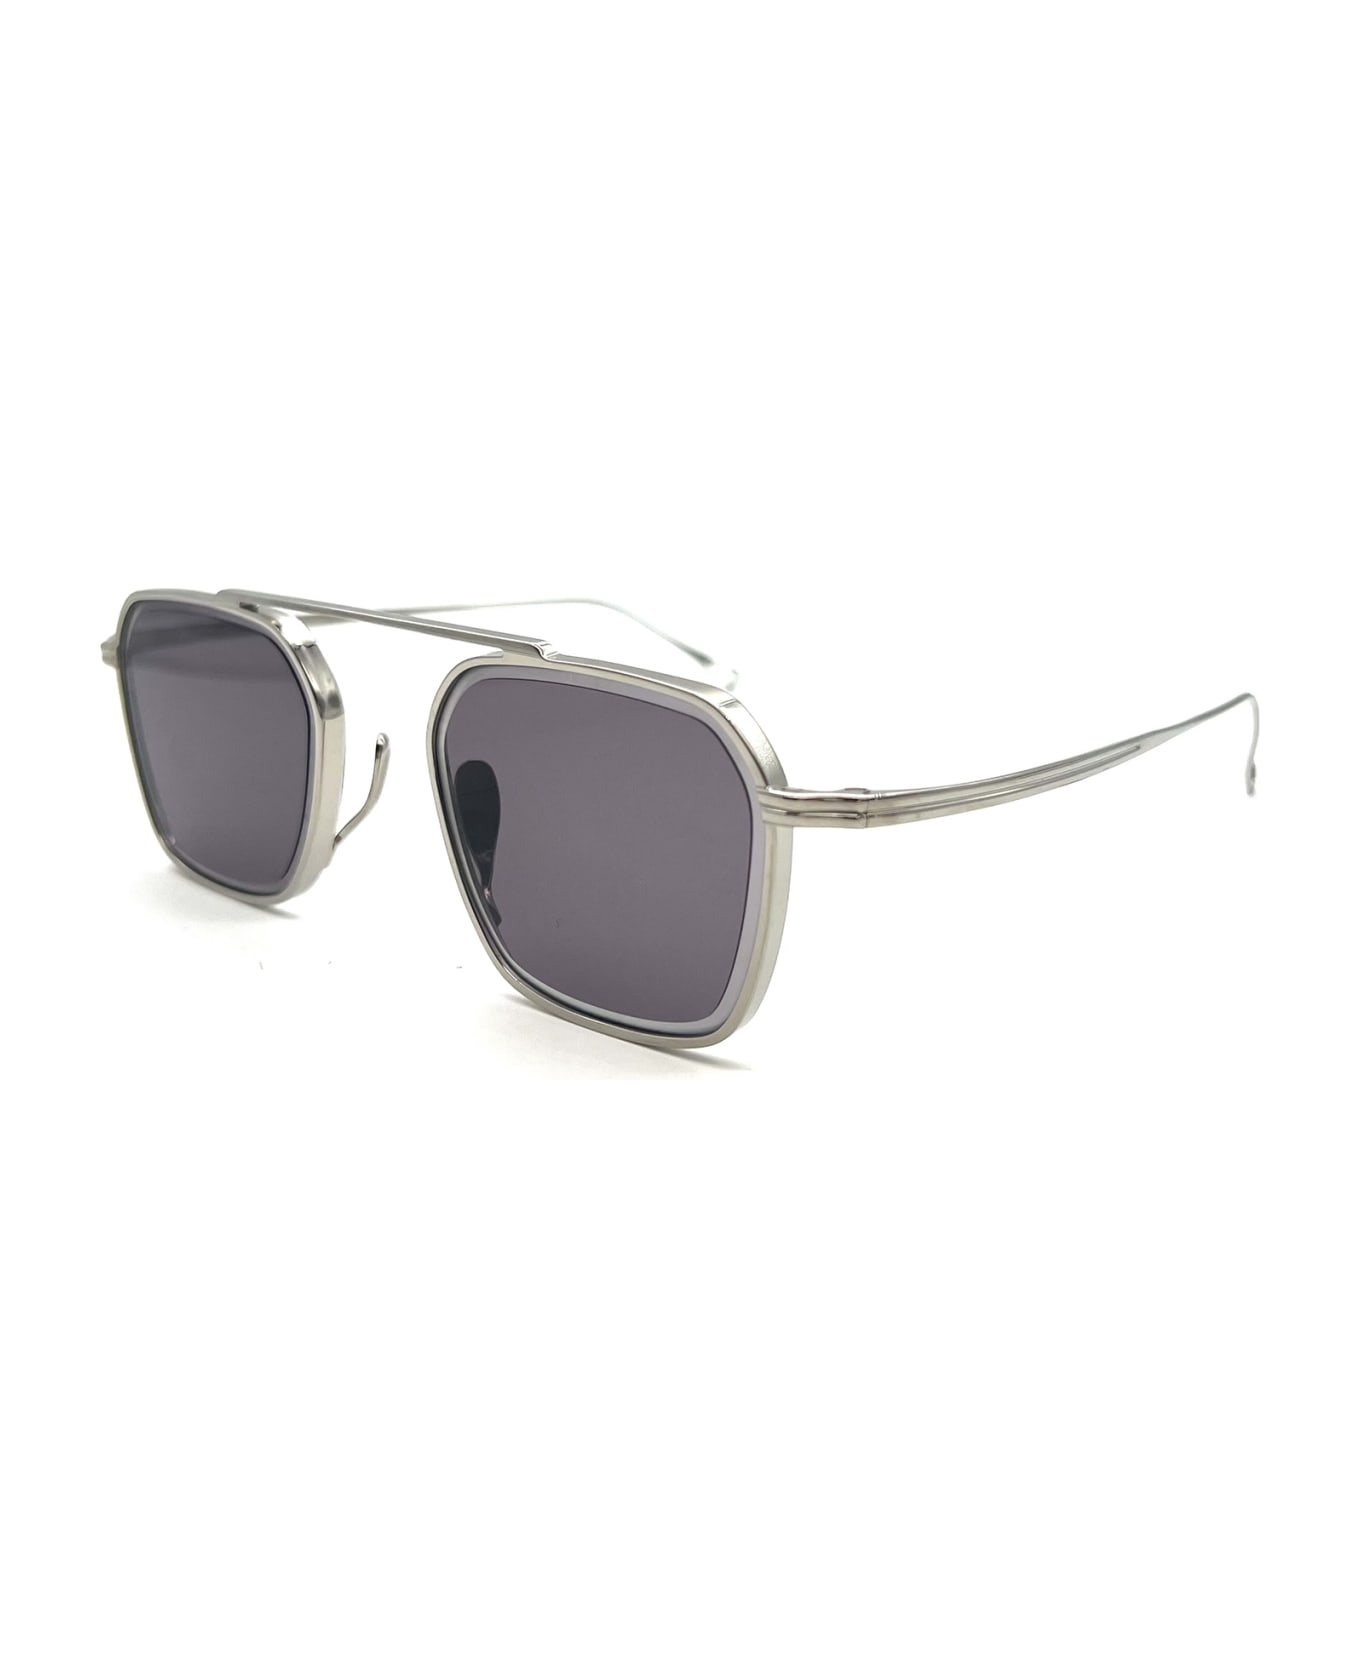 KameManNen SG KMN 9502 Sunglasses - Ts